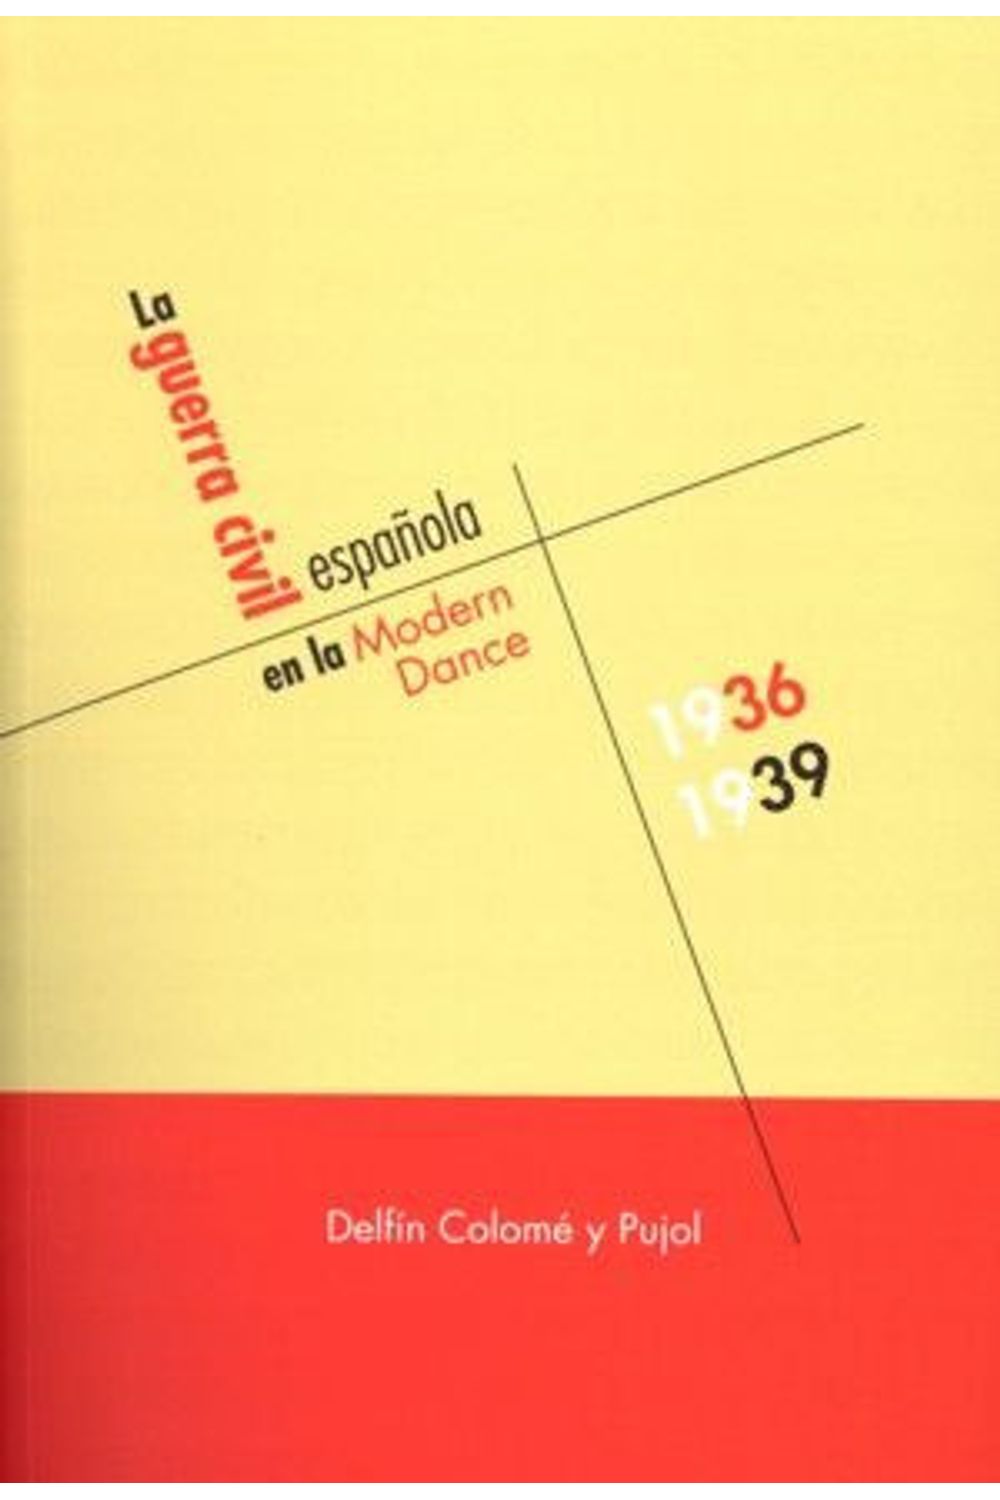 La Guerra CIVIL Española En La Modern Dance, 1936-1939